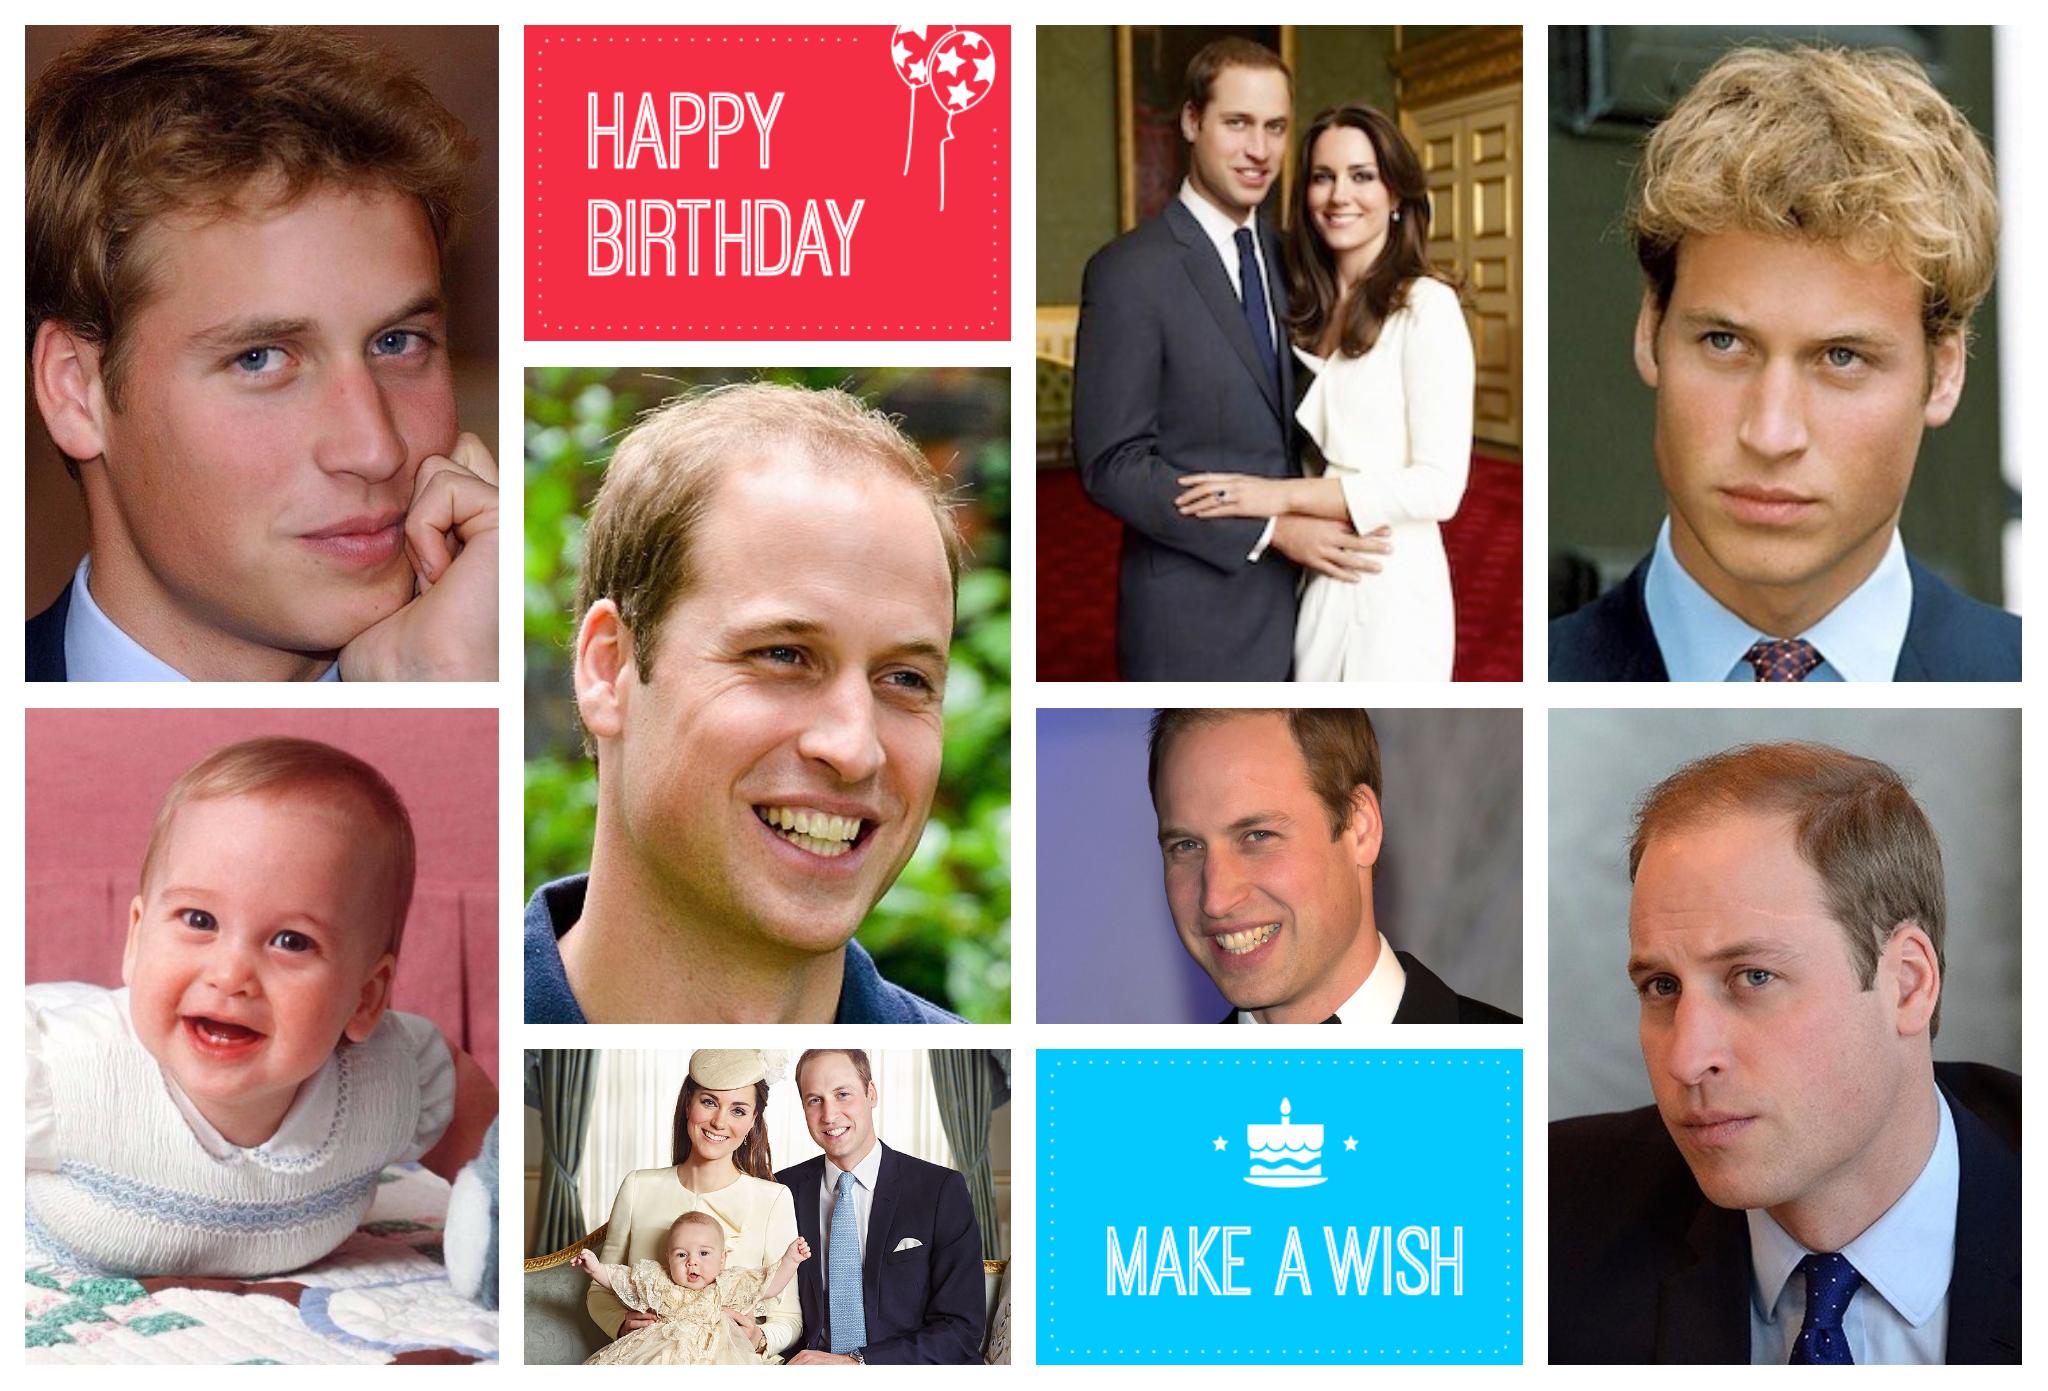 Happy Birthday to the Duke of Cambridge, HRH Prince William! Help us wish him the very best birthday today!! 